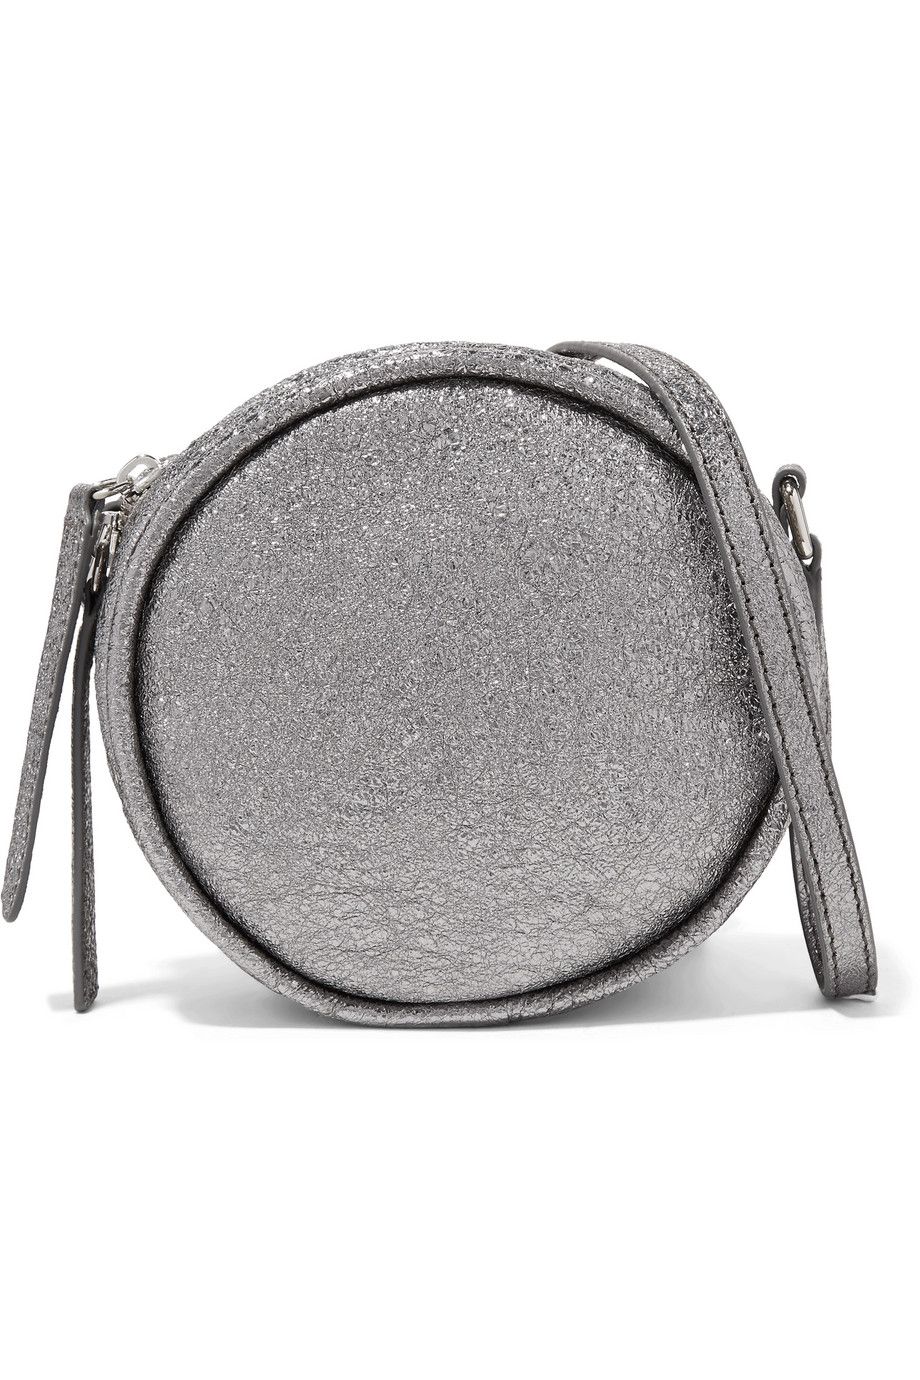 Bag, Handbag, Product, Silver, Fashion accessory, Coin purse, Leather, Metal, Shoulder bag, Silver, 